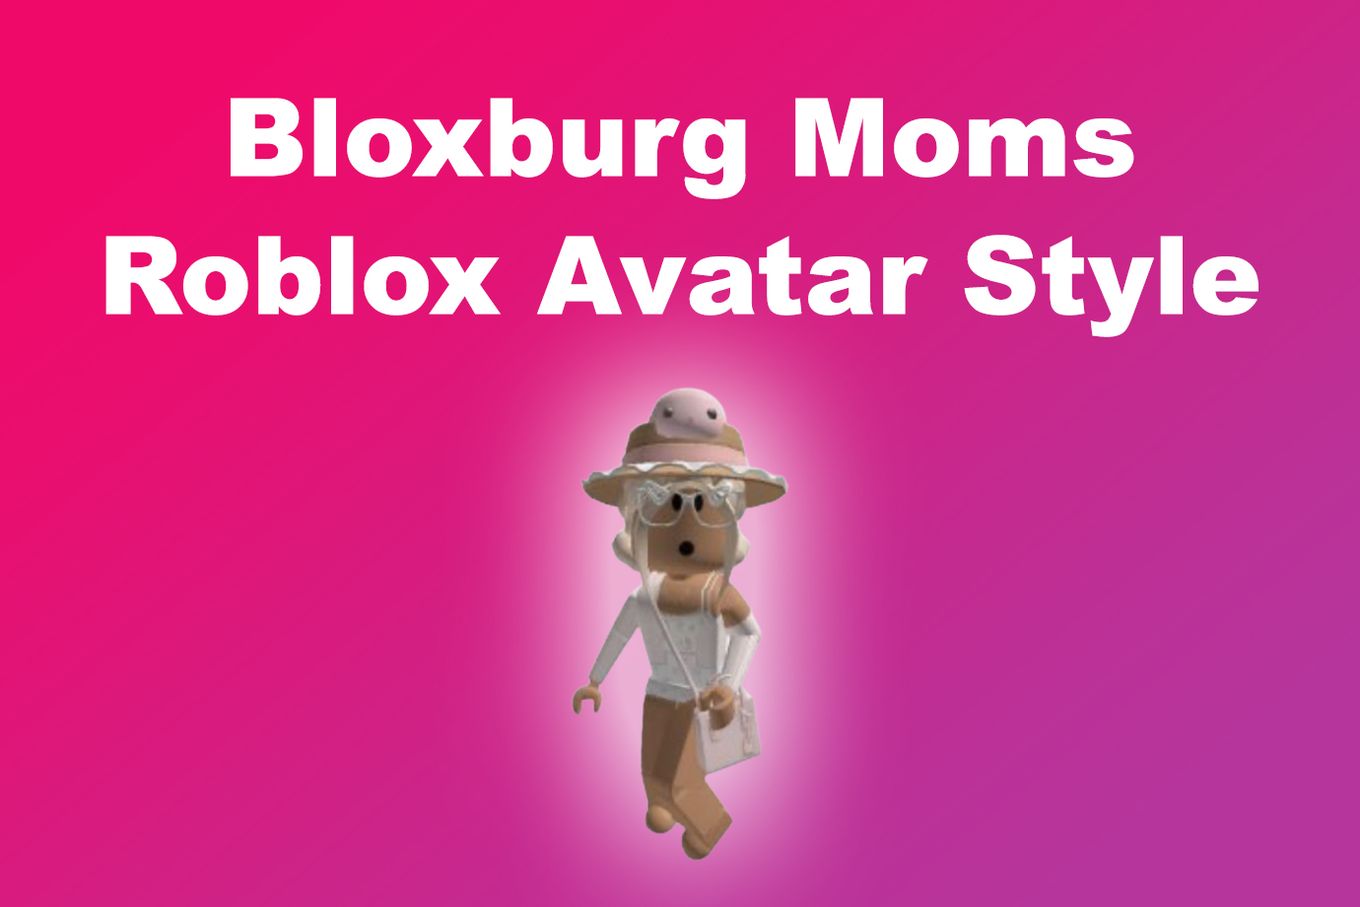 Bloxburg Moms Roblox Avatar Style